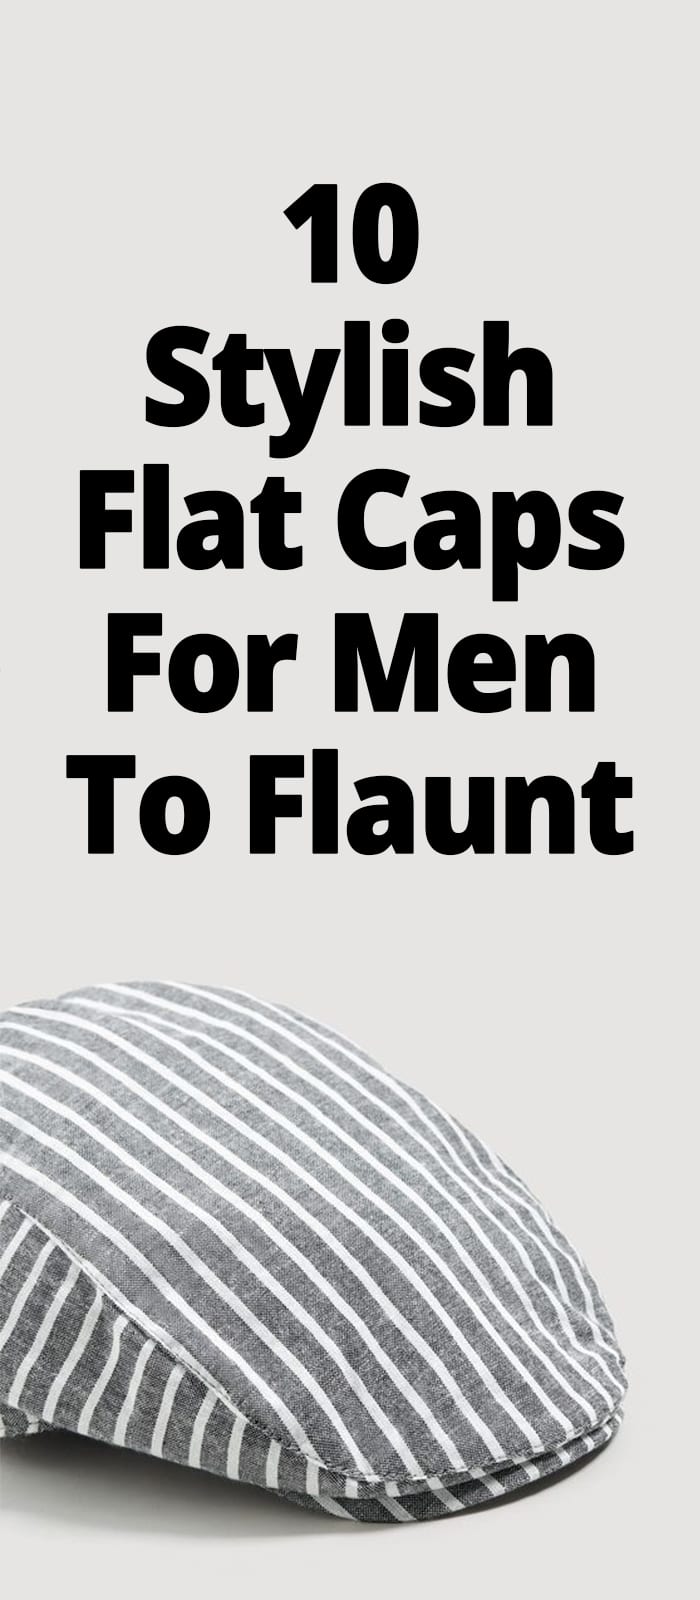 10 STYLISH FLAT CAPS FOR MEN